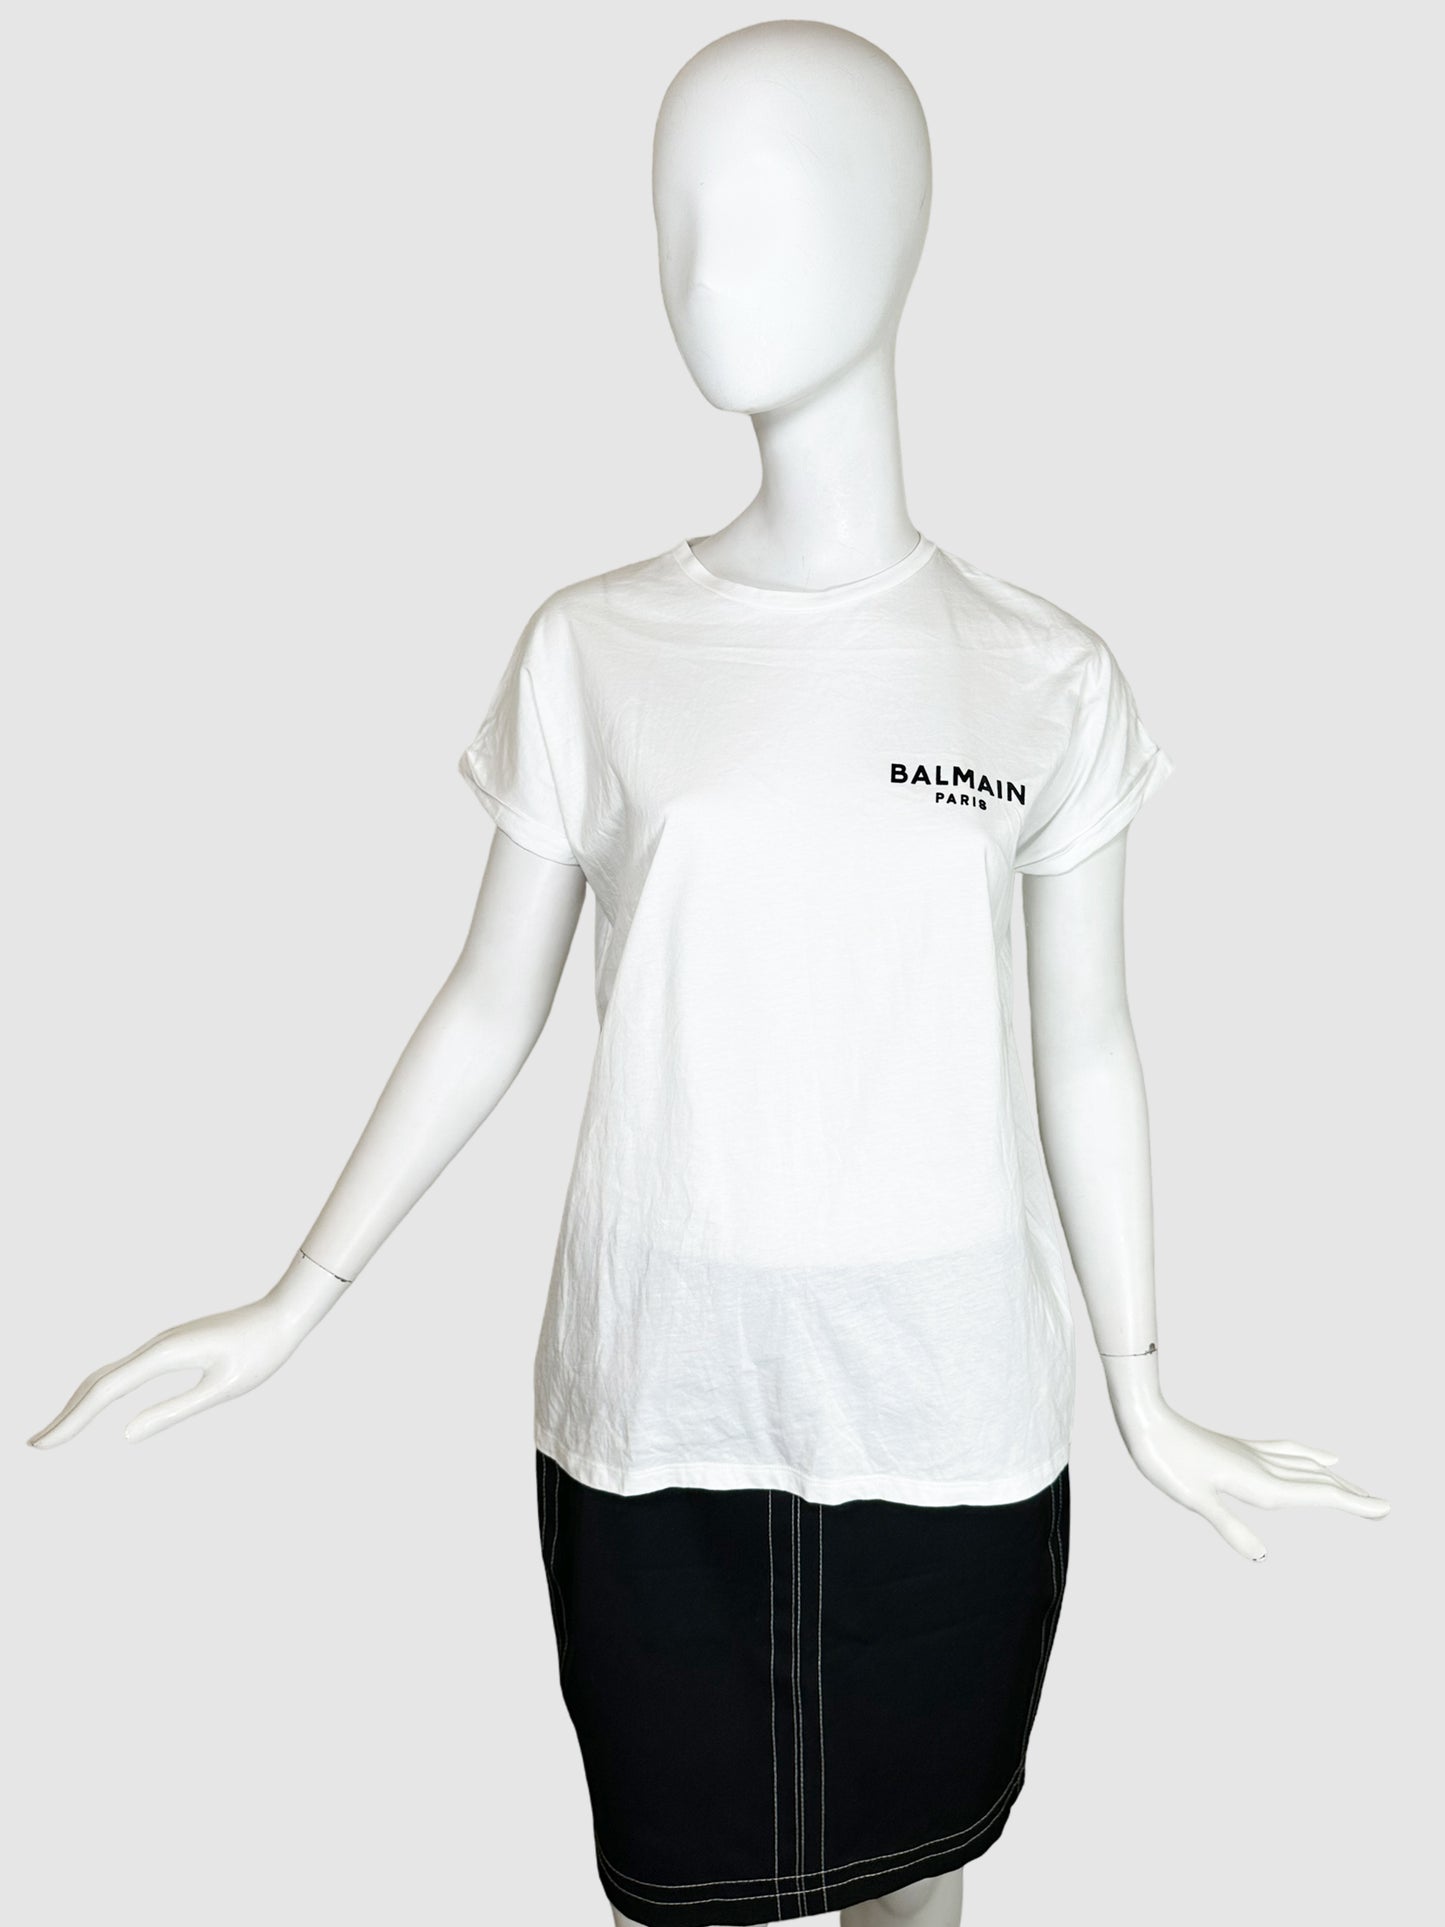 Balmain Printed T-shirt - Size S